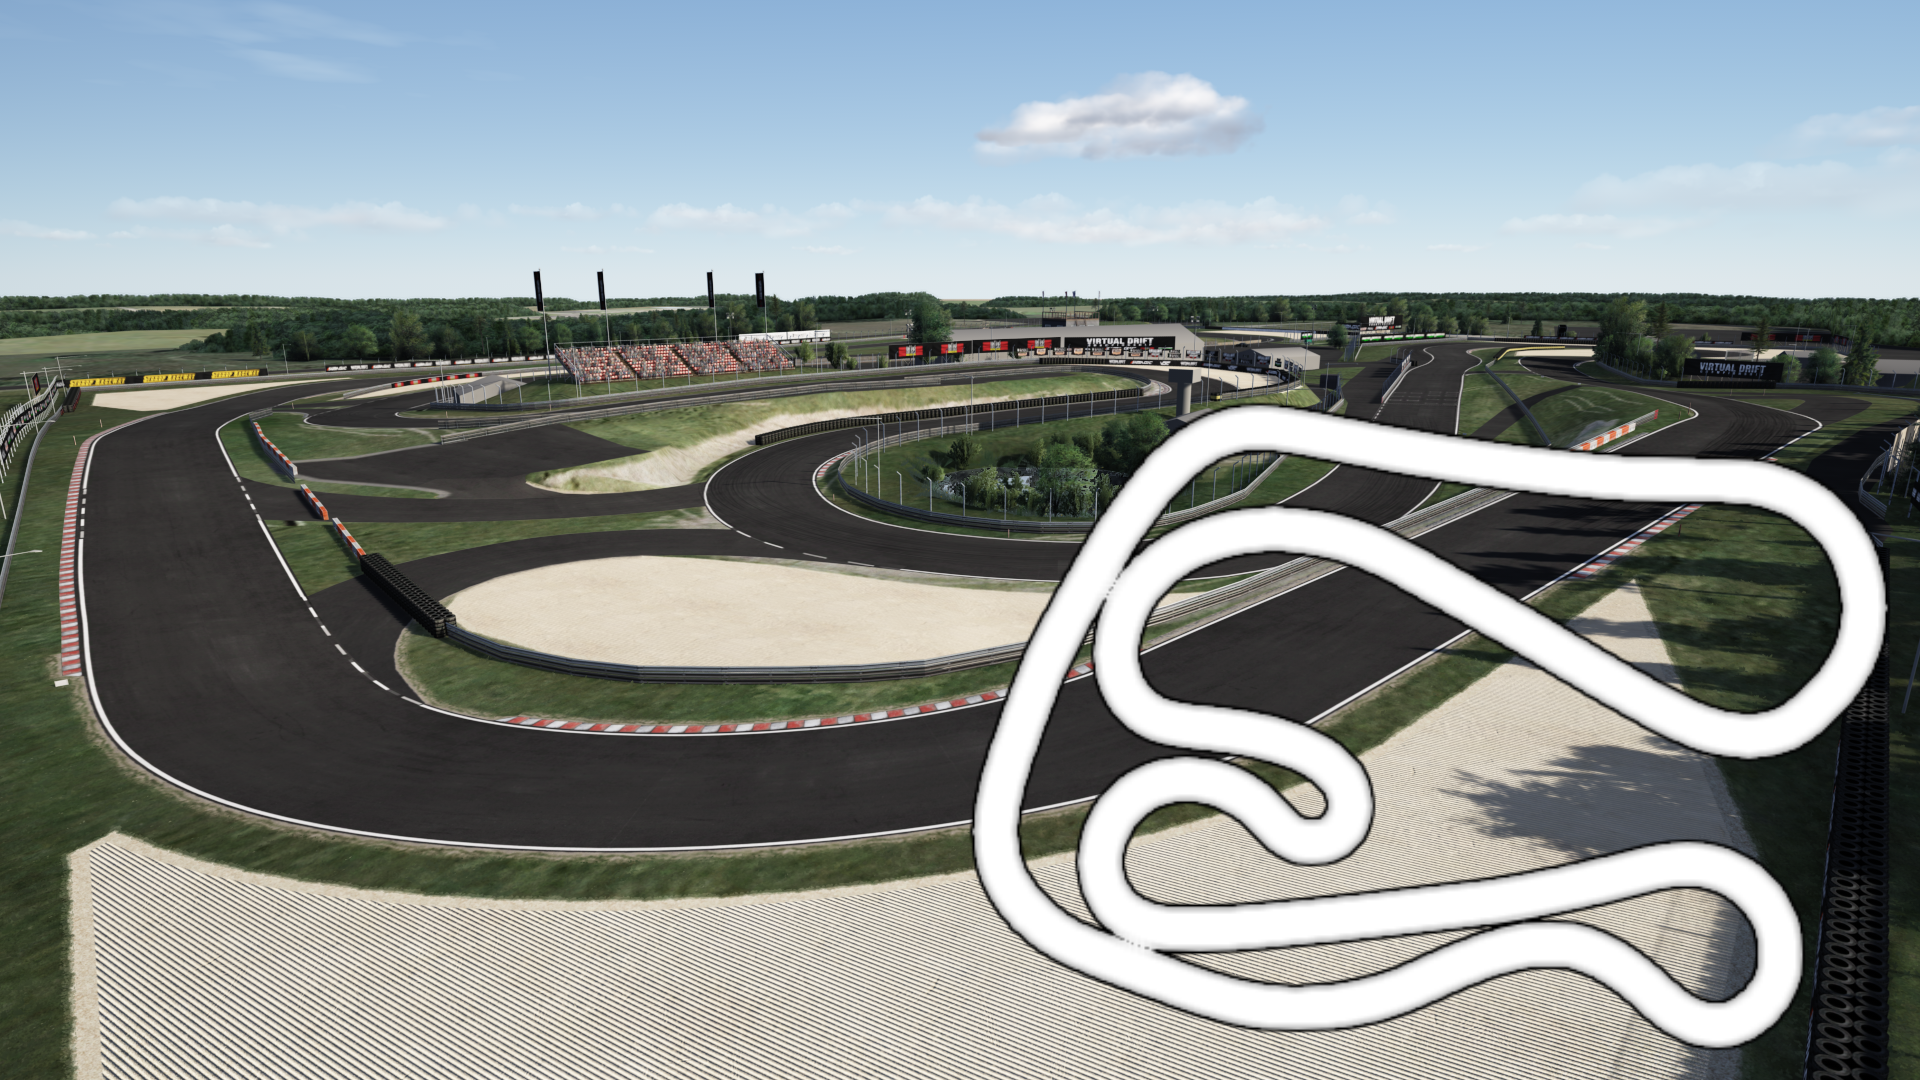 VDC Sturup Raceway, layout open